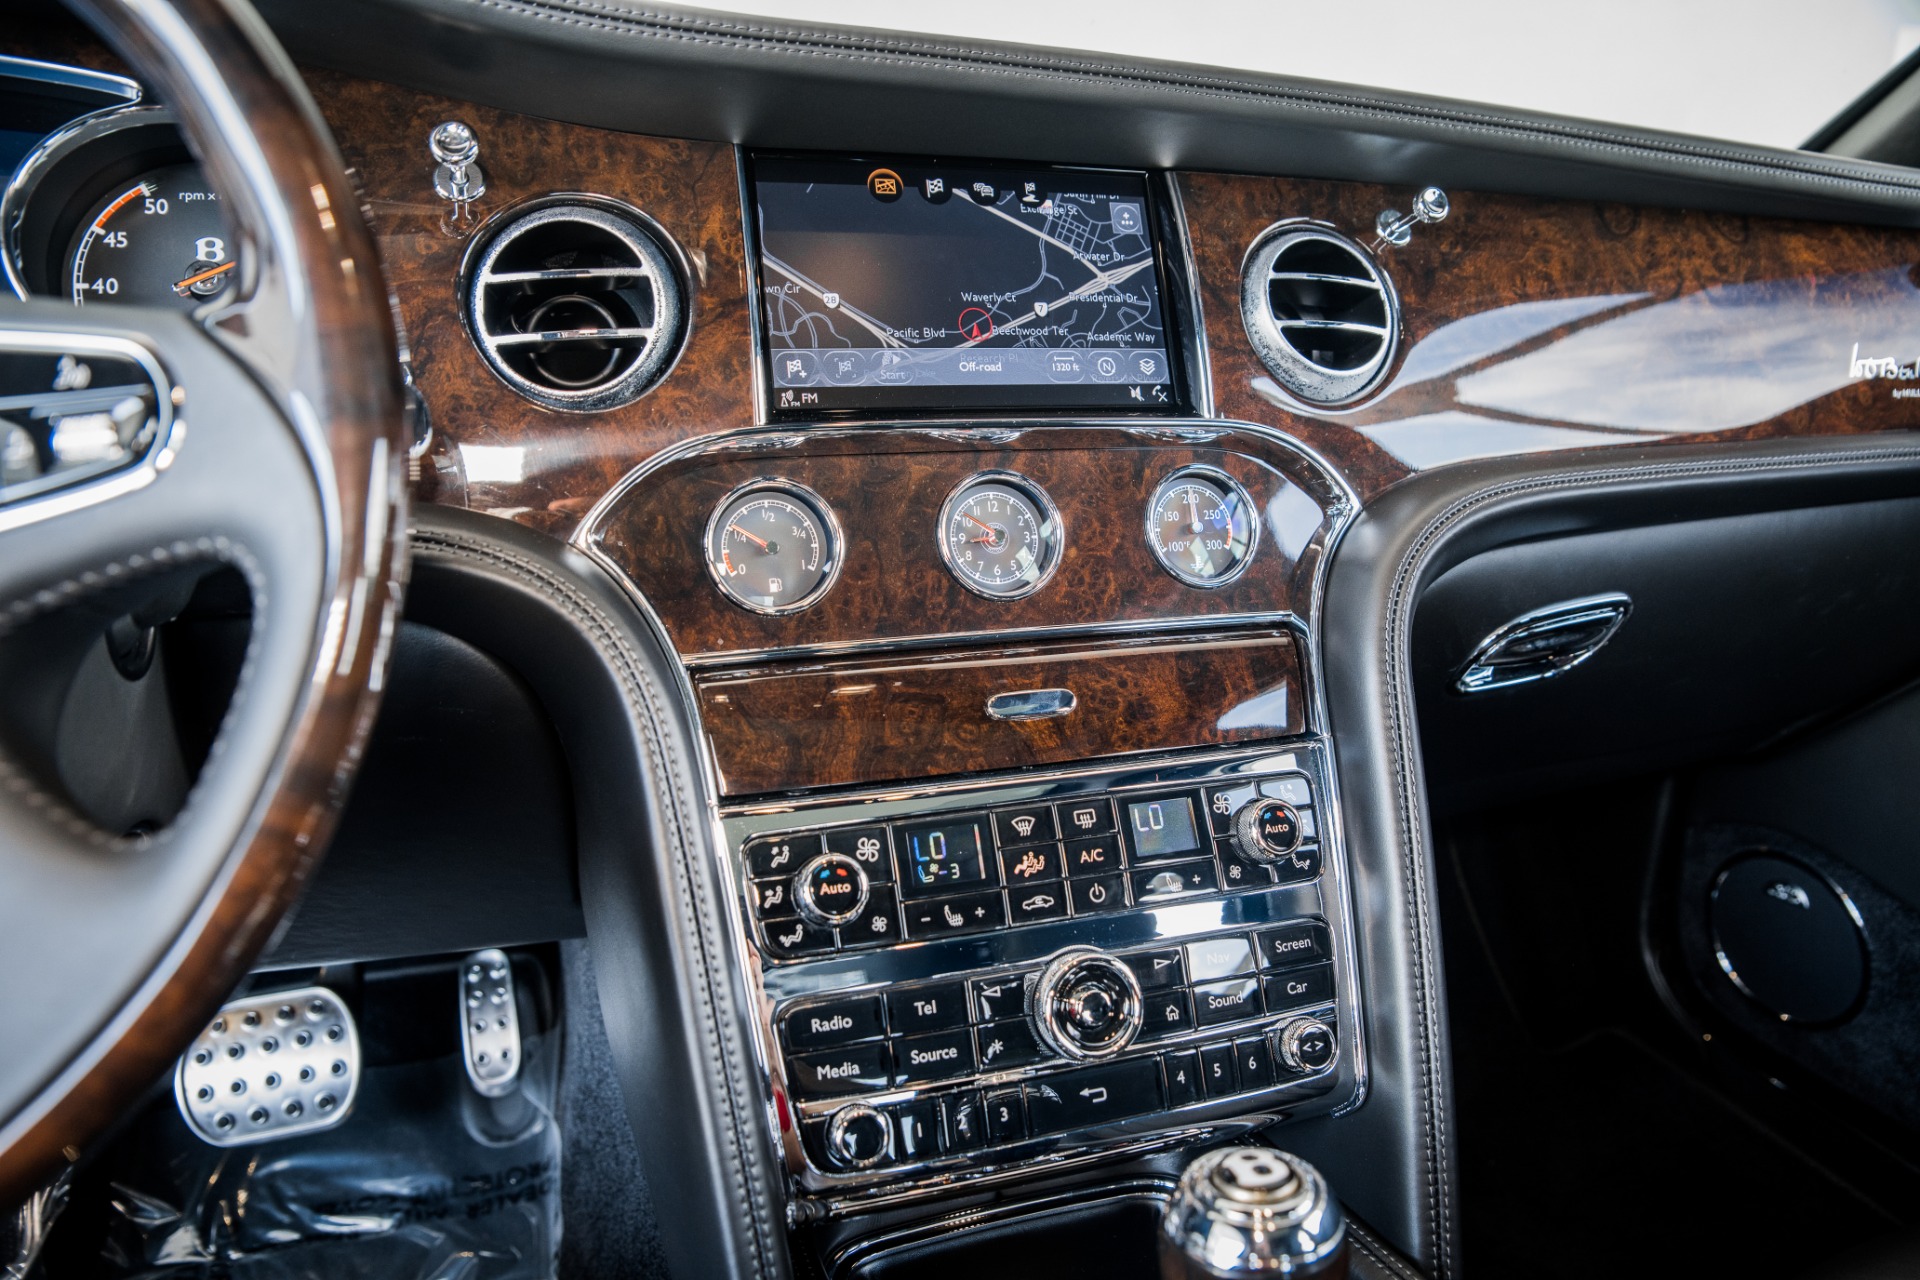 2019 Bentley Mulsanne Review | Pricing, Trims & Photos - TrueCar